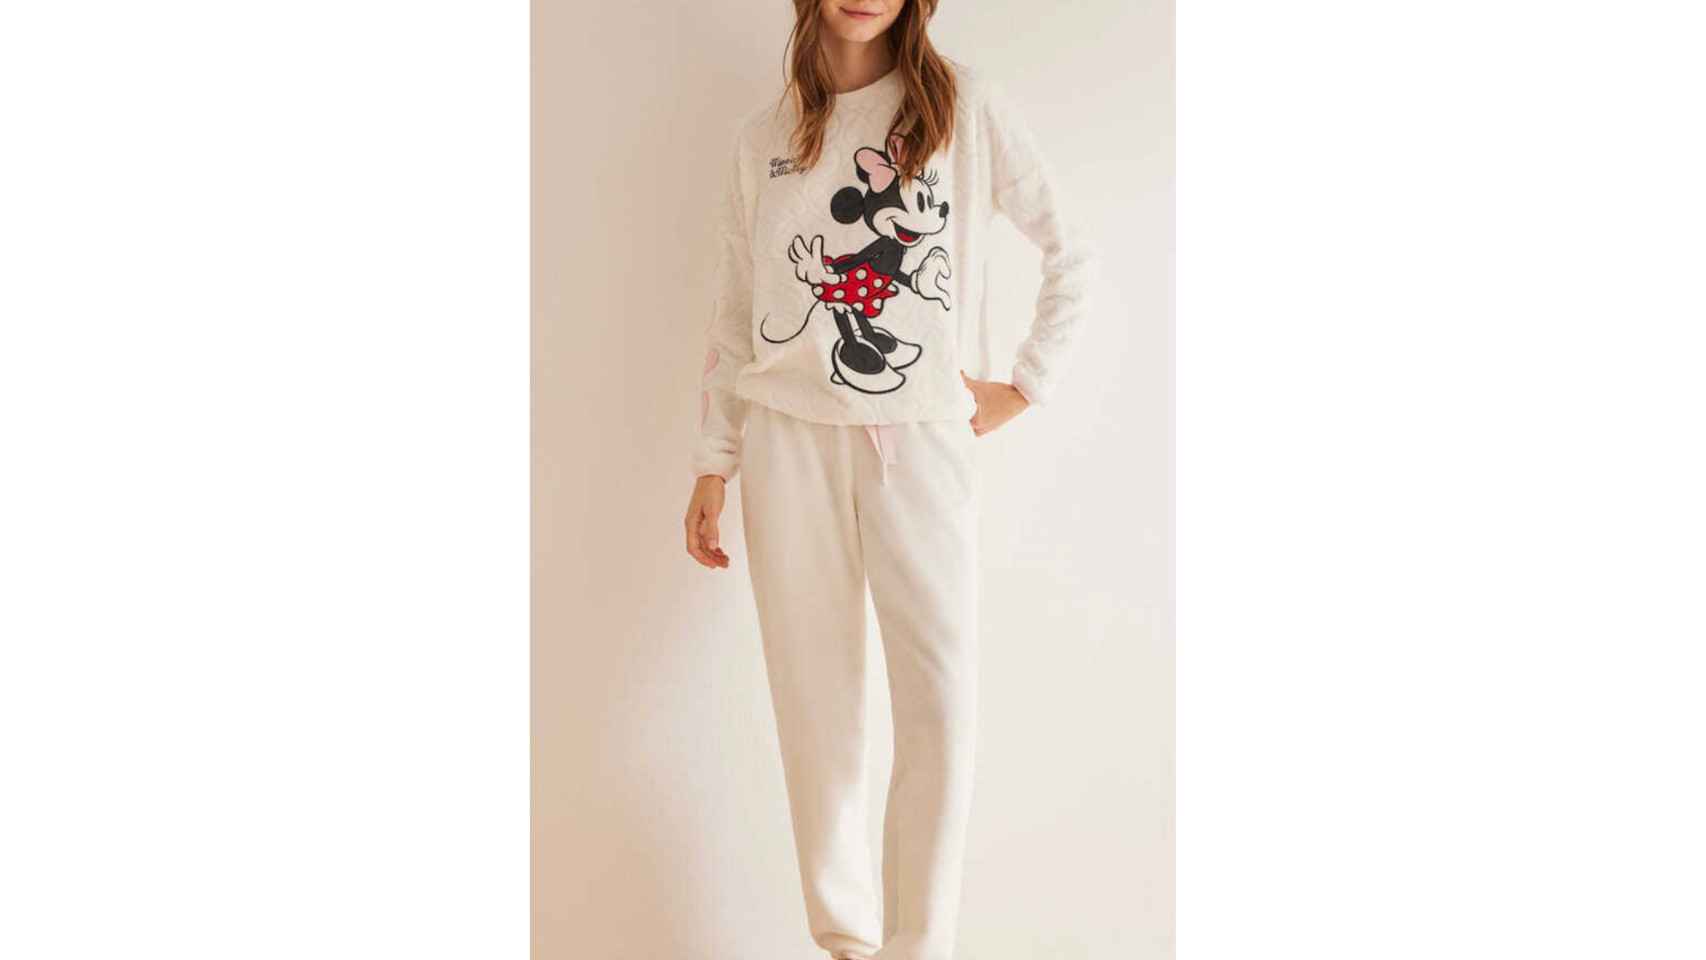 Pijama Minnie Mouse, Women'secret.